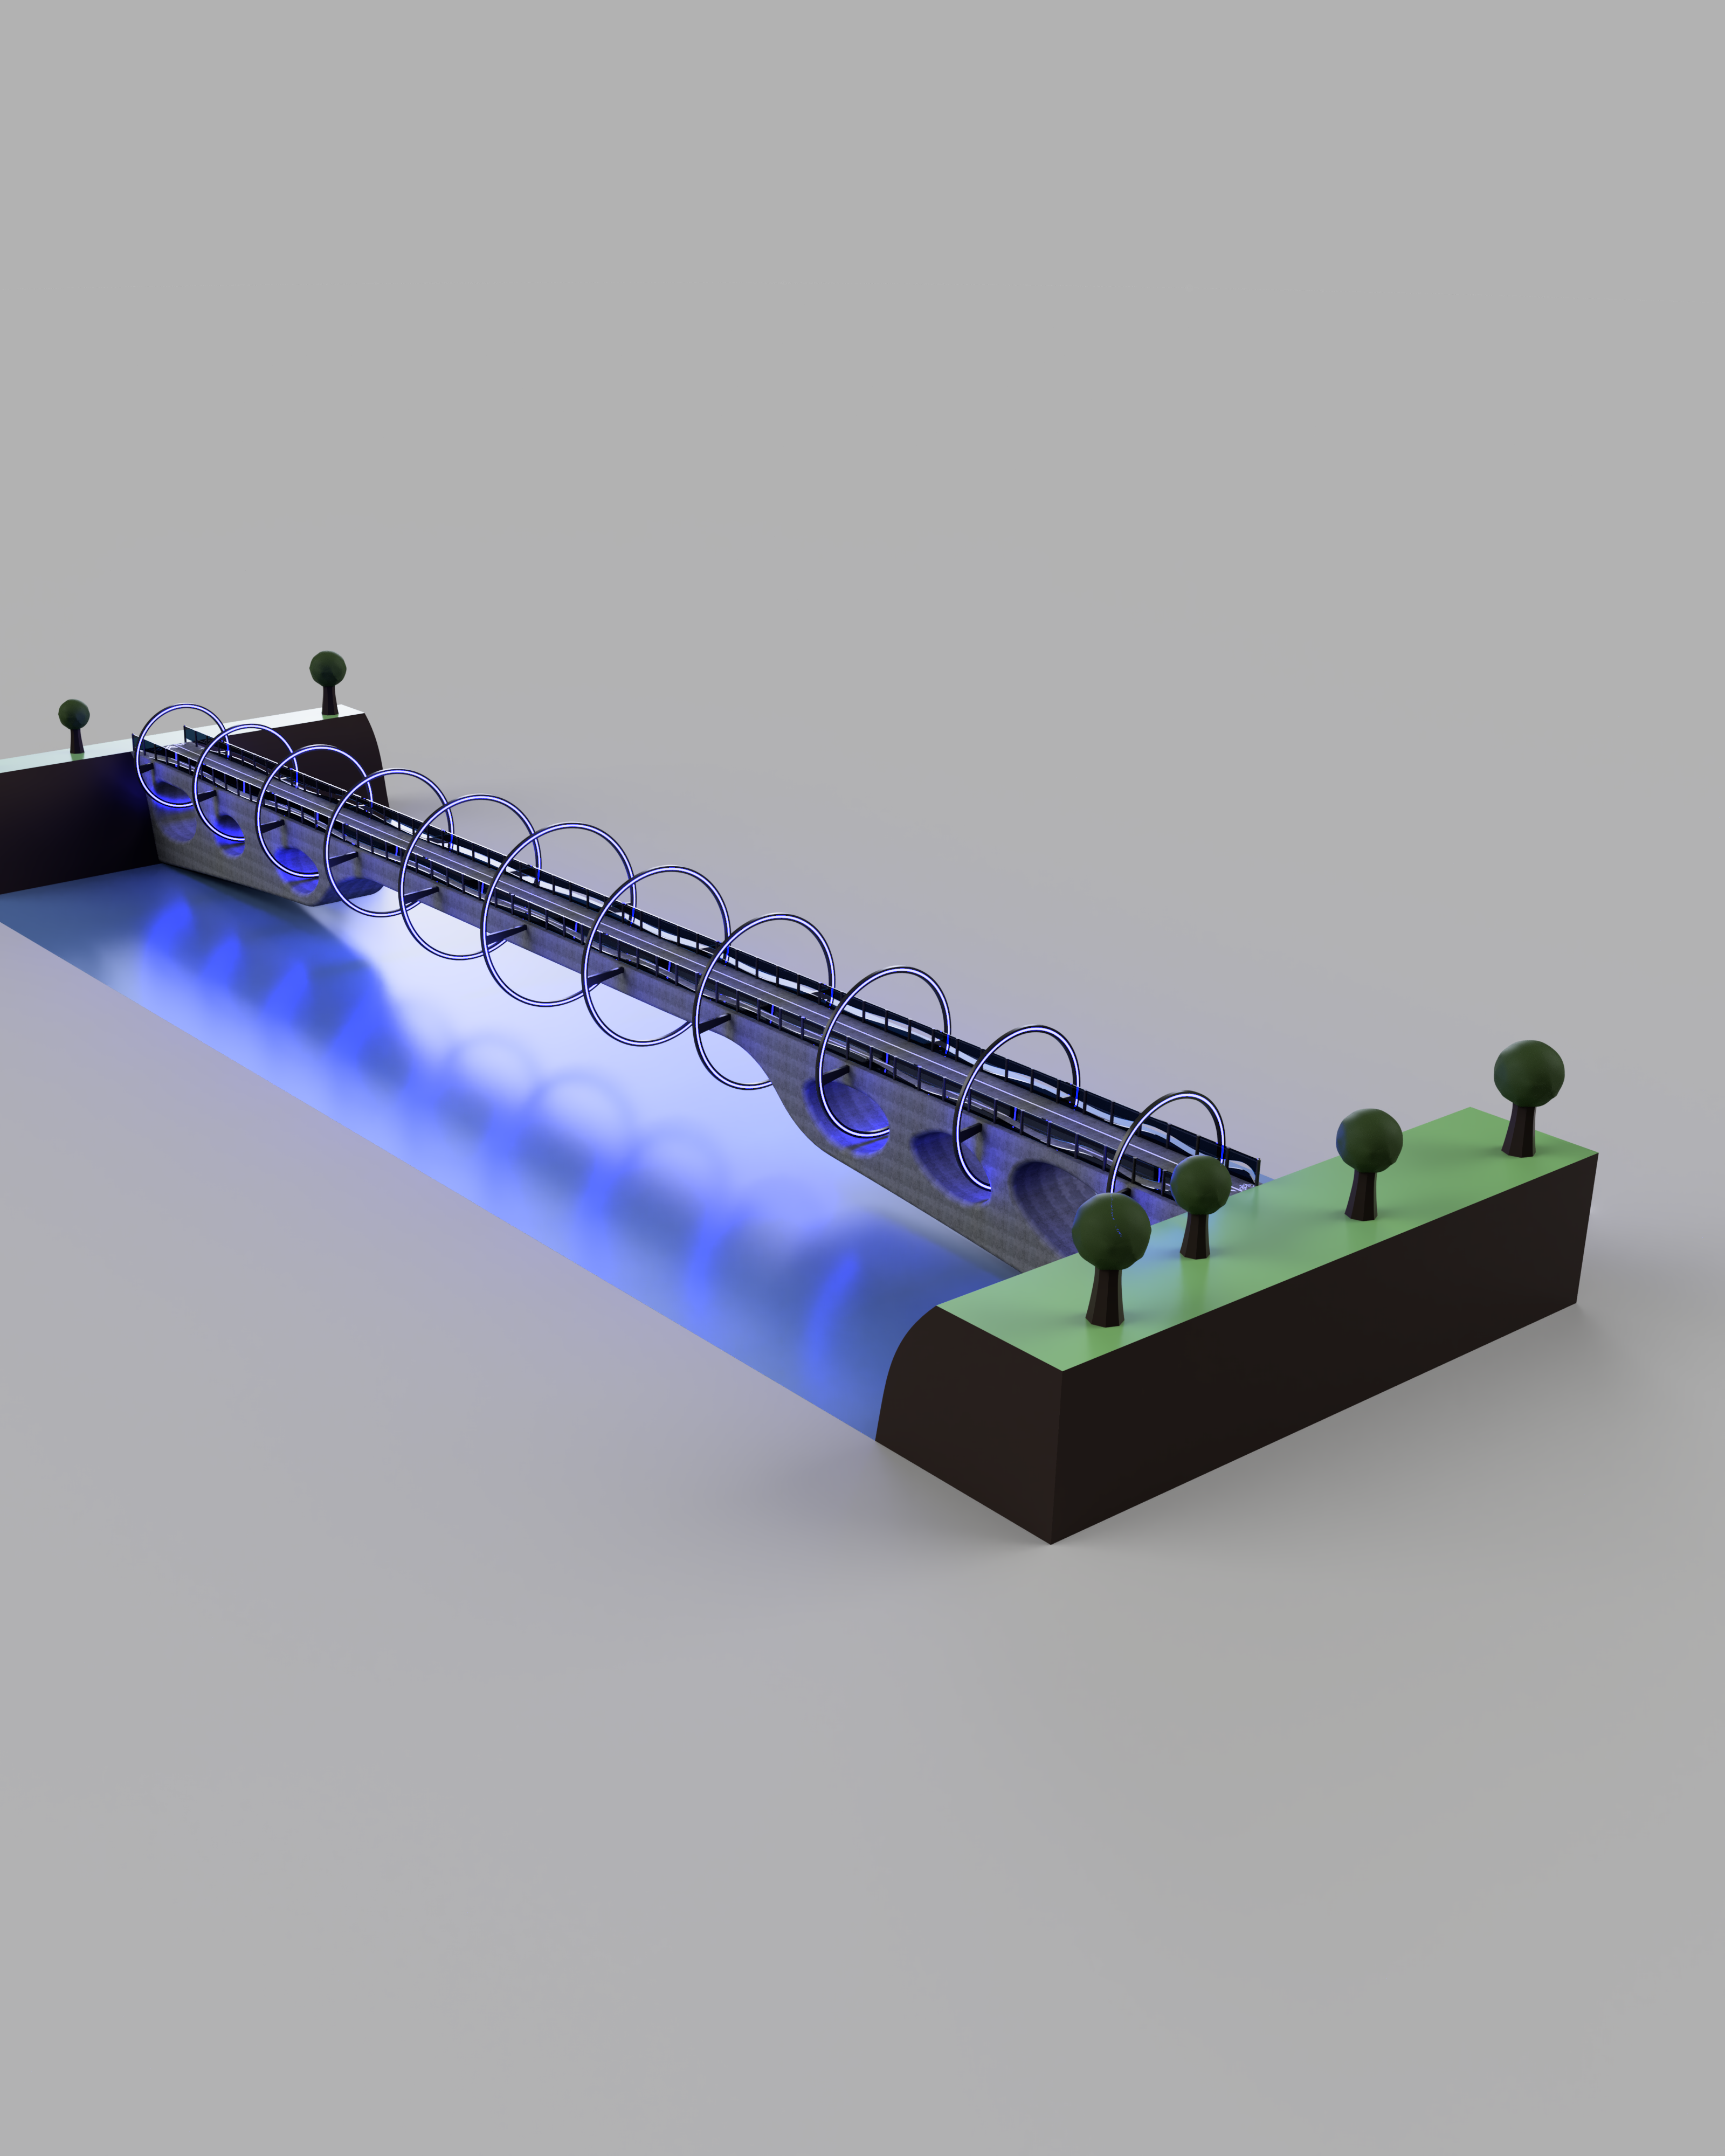 Blue Raccoon Crossing: a Fusion 360 Bridge Using Generative Design